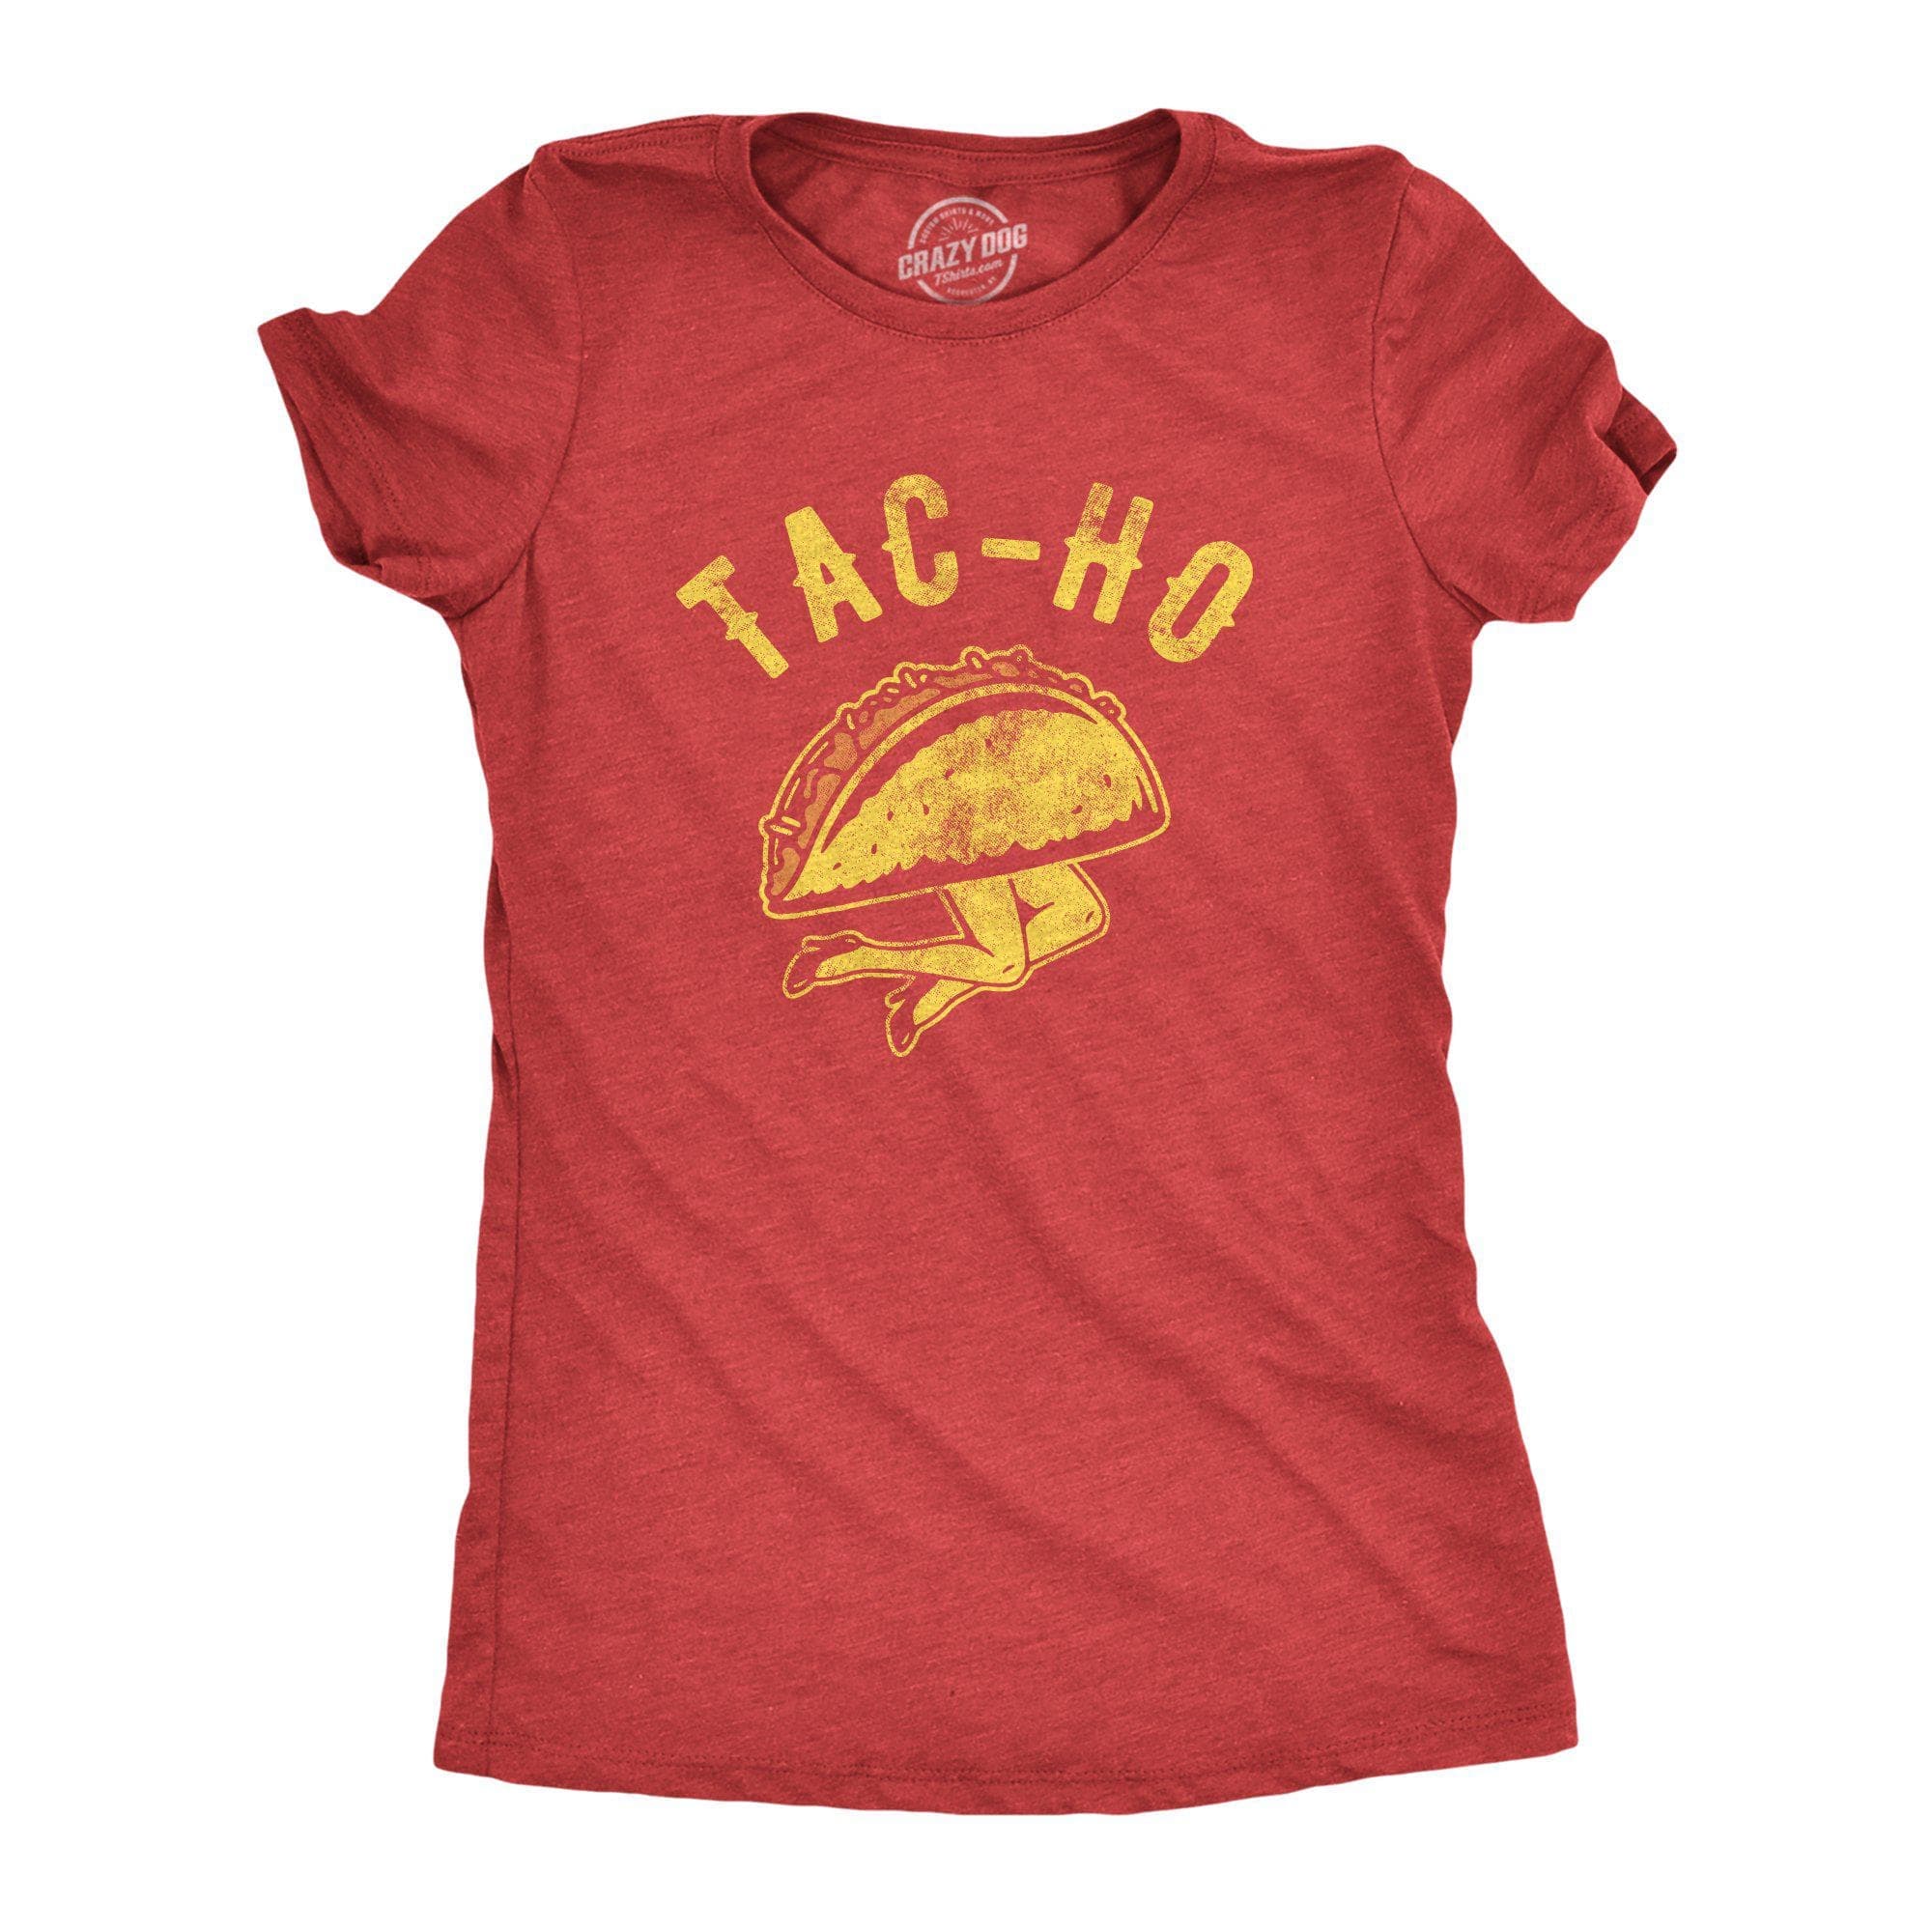 Taco Ho Women's Tshirt - Crazy Dog T-Shirts